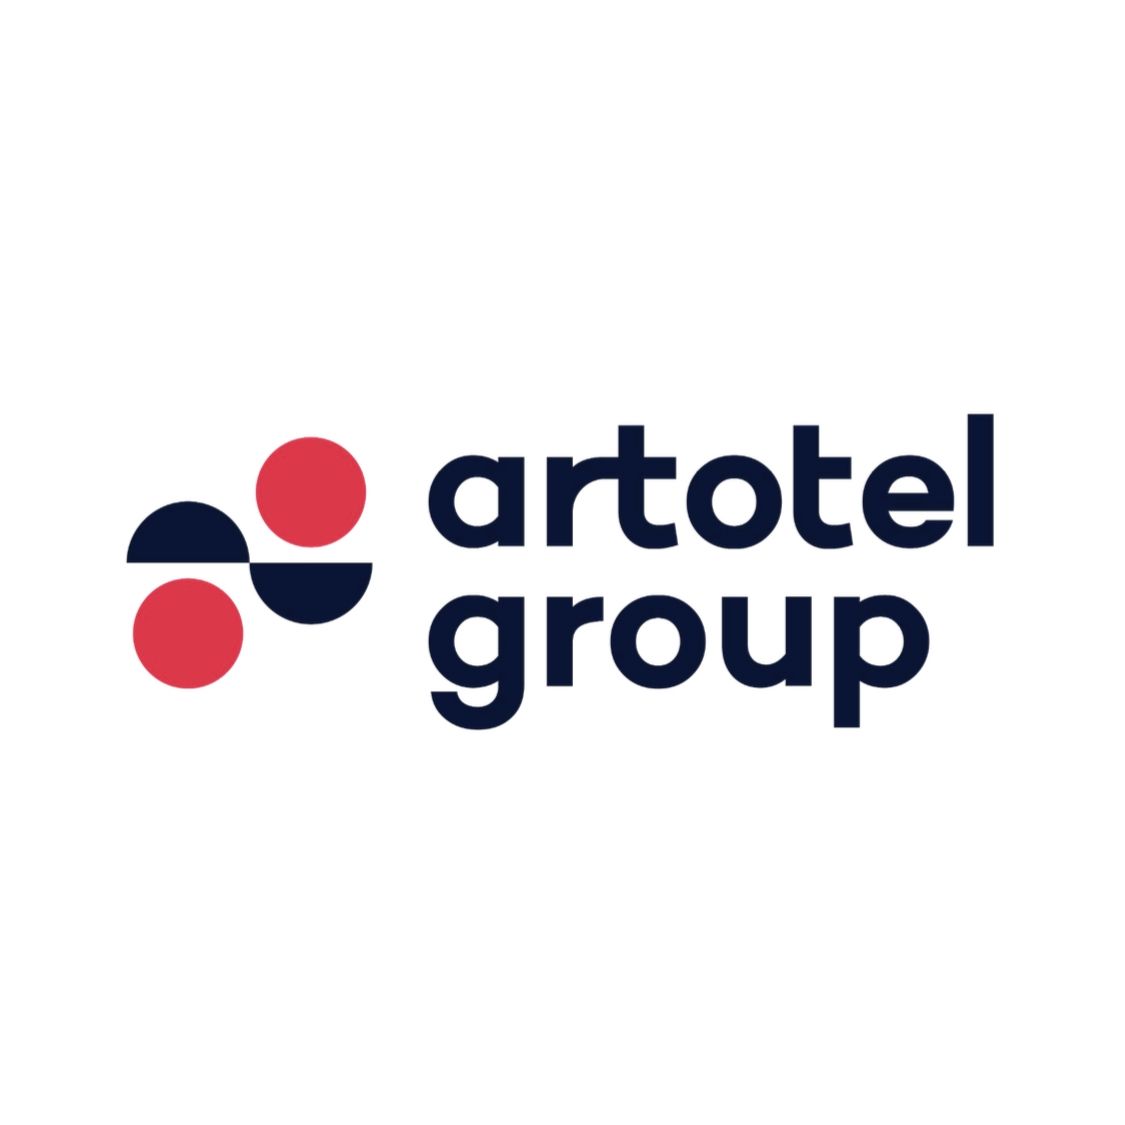 ARTOTEL Group